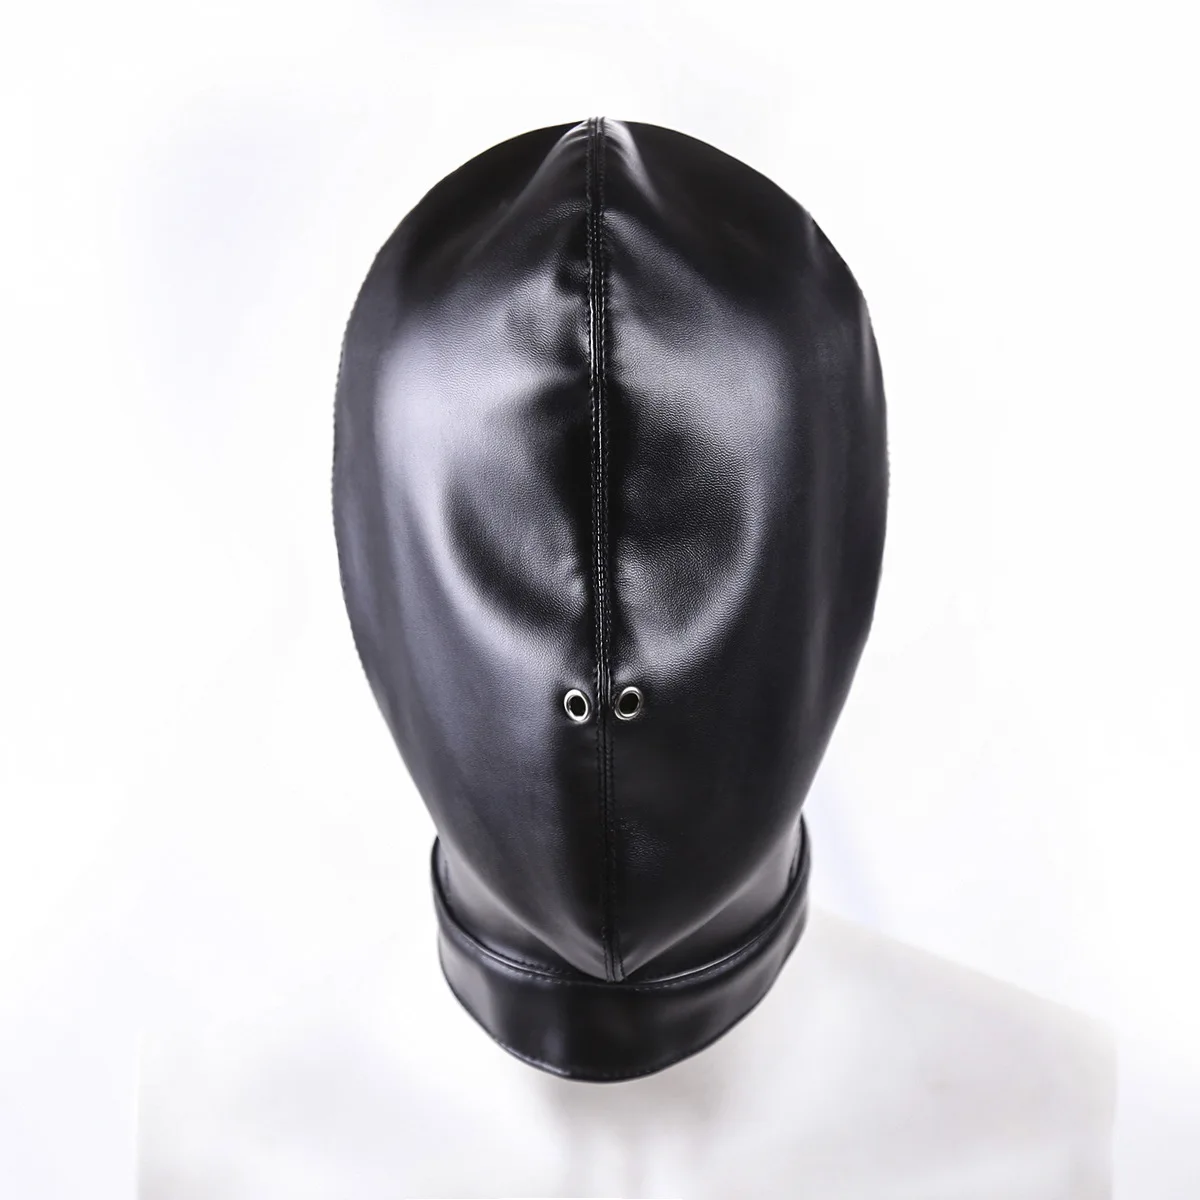 

Women Men Party Masks Eye Mask Blindfold Soft PU Leather Cosplay Masks Head Hood Mask Accessories Halloween Mask